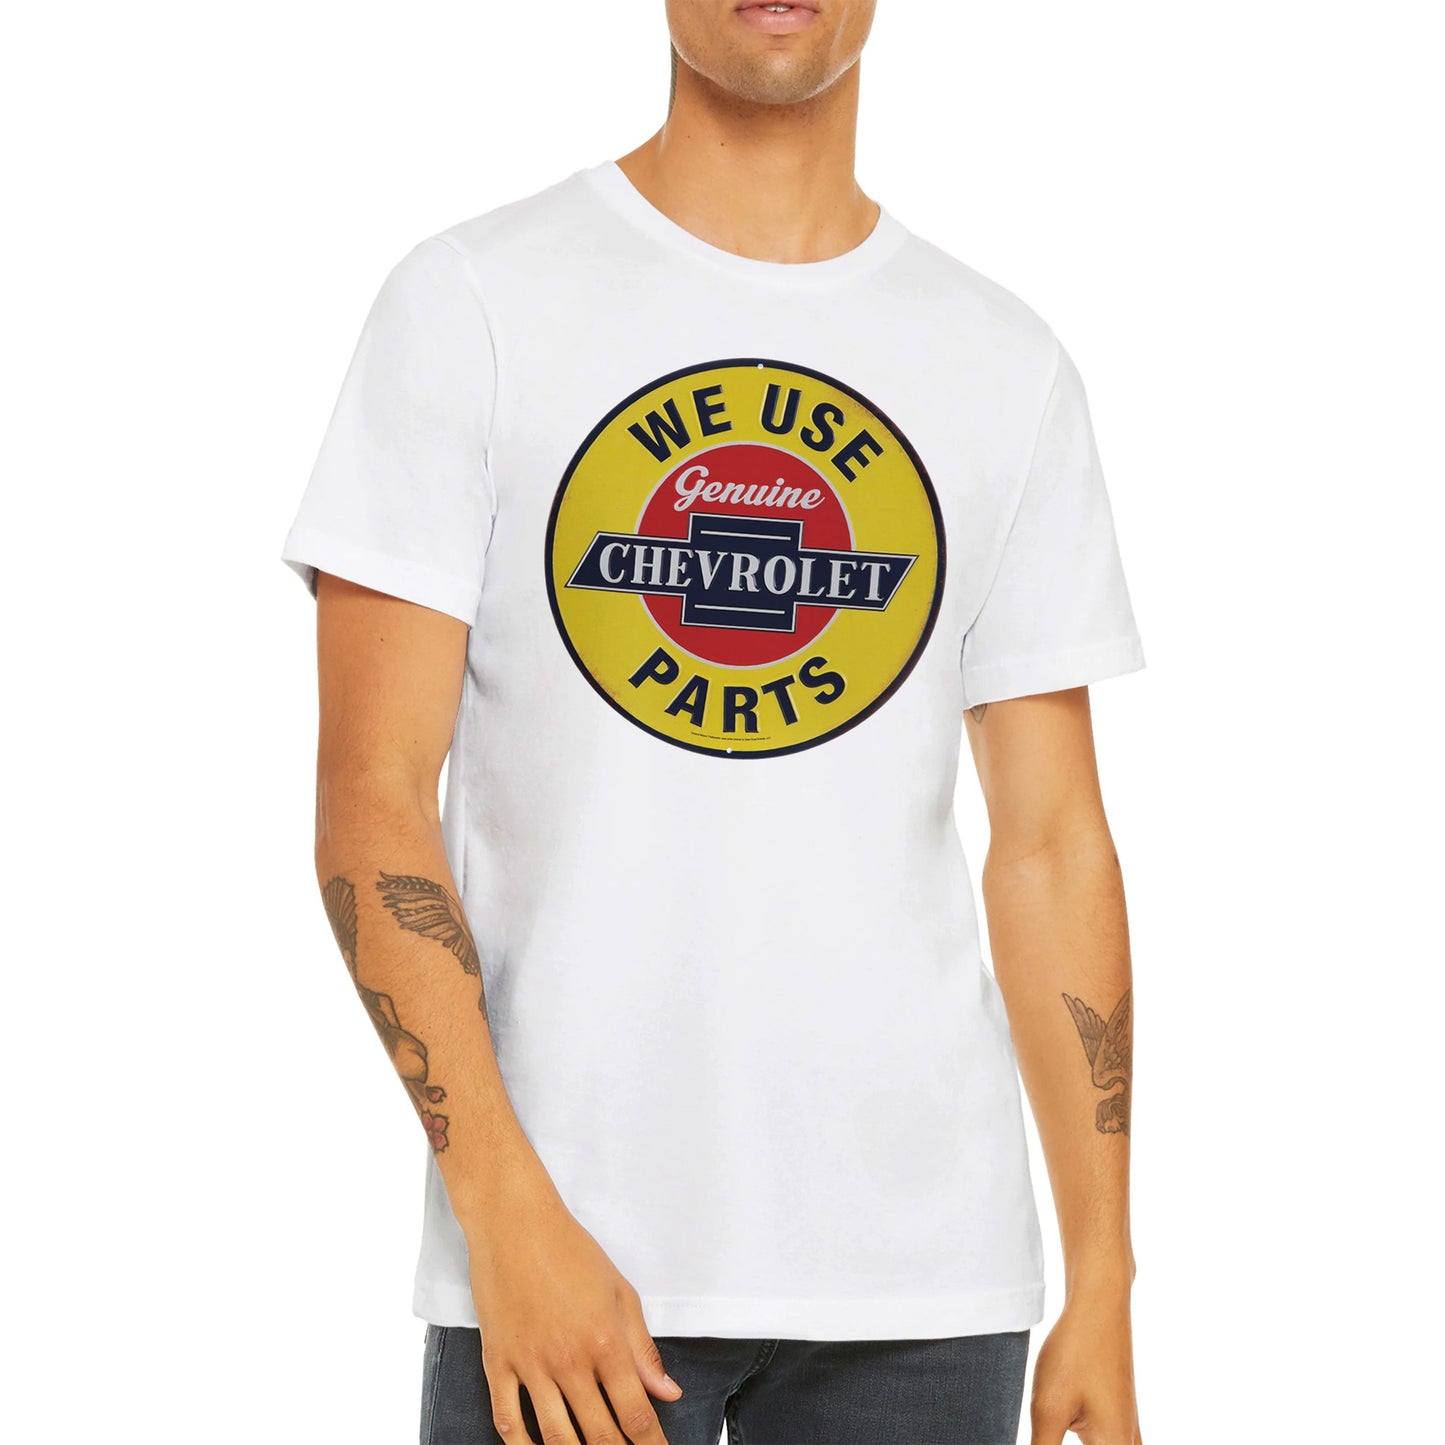 Bil T-shirt - Vintage distorted Chevrolet sign - Premium Unisex T-shirt